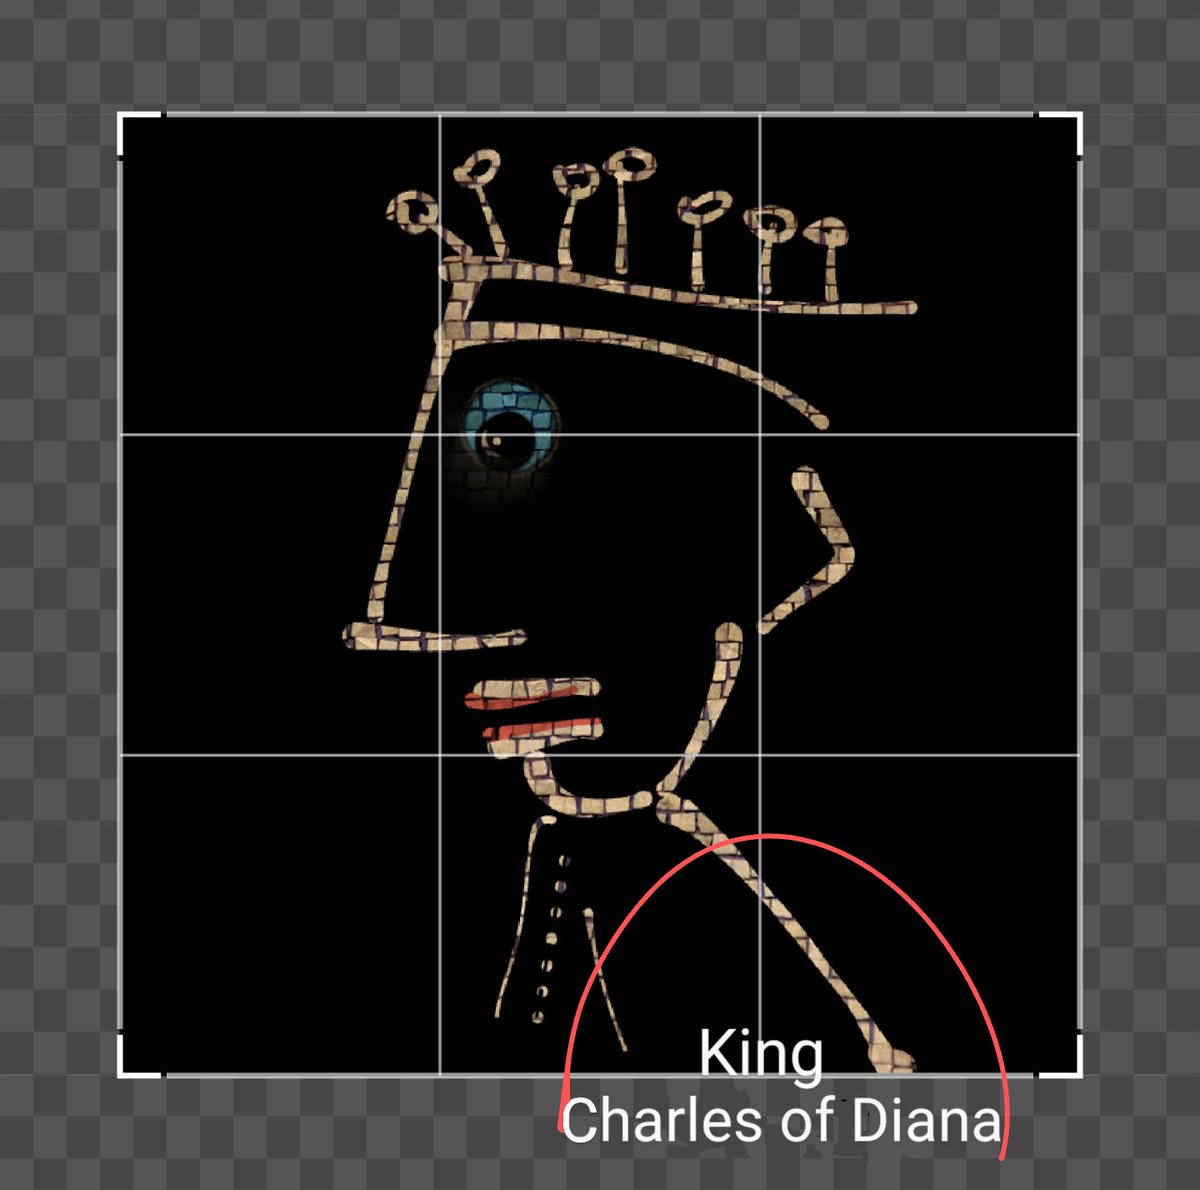 King 'Charles of Diana'

#king #queen
#love #life #live #free
#defend #freedom
#respect #integrity
#believe the #truth 
#loveandpeace❤ #peace
#hochiminhcity
#alwaysandforever 
#artgallerytokyo #artgalleryjapan #japan #artoftheday 
@opensea #OpenSeaNFT 
#montreal